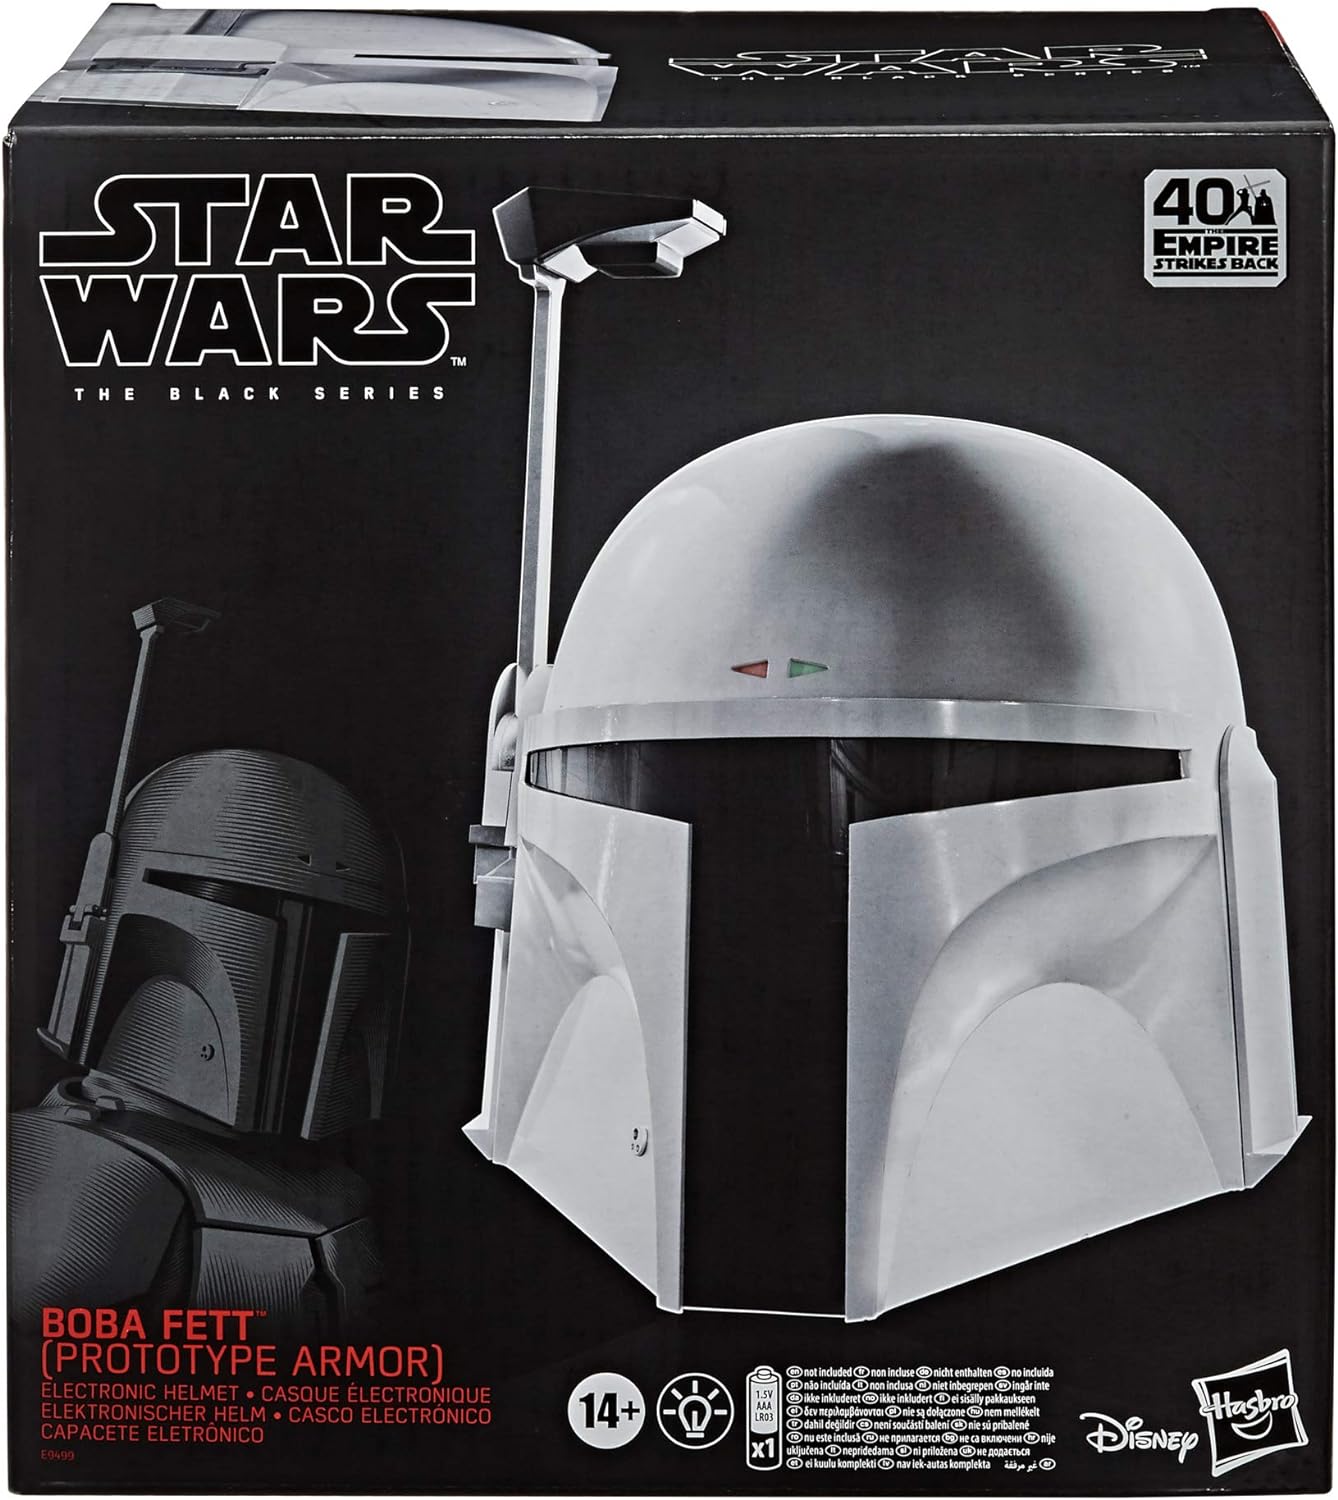 Star Wars Black Series - Boba Fett Prototype Armor Helmet